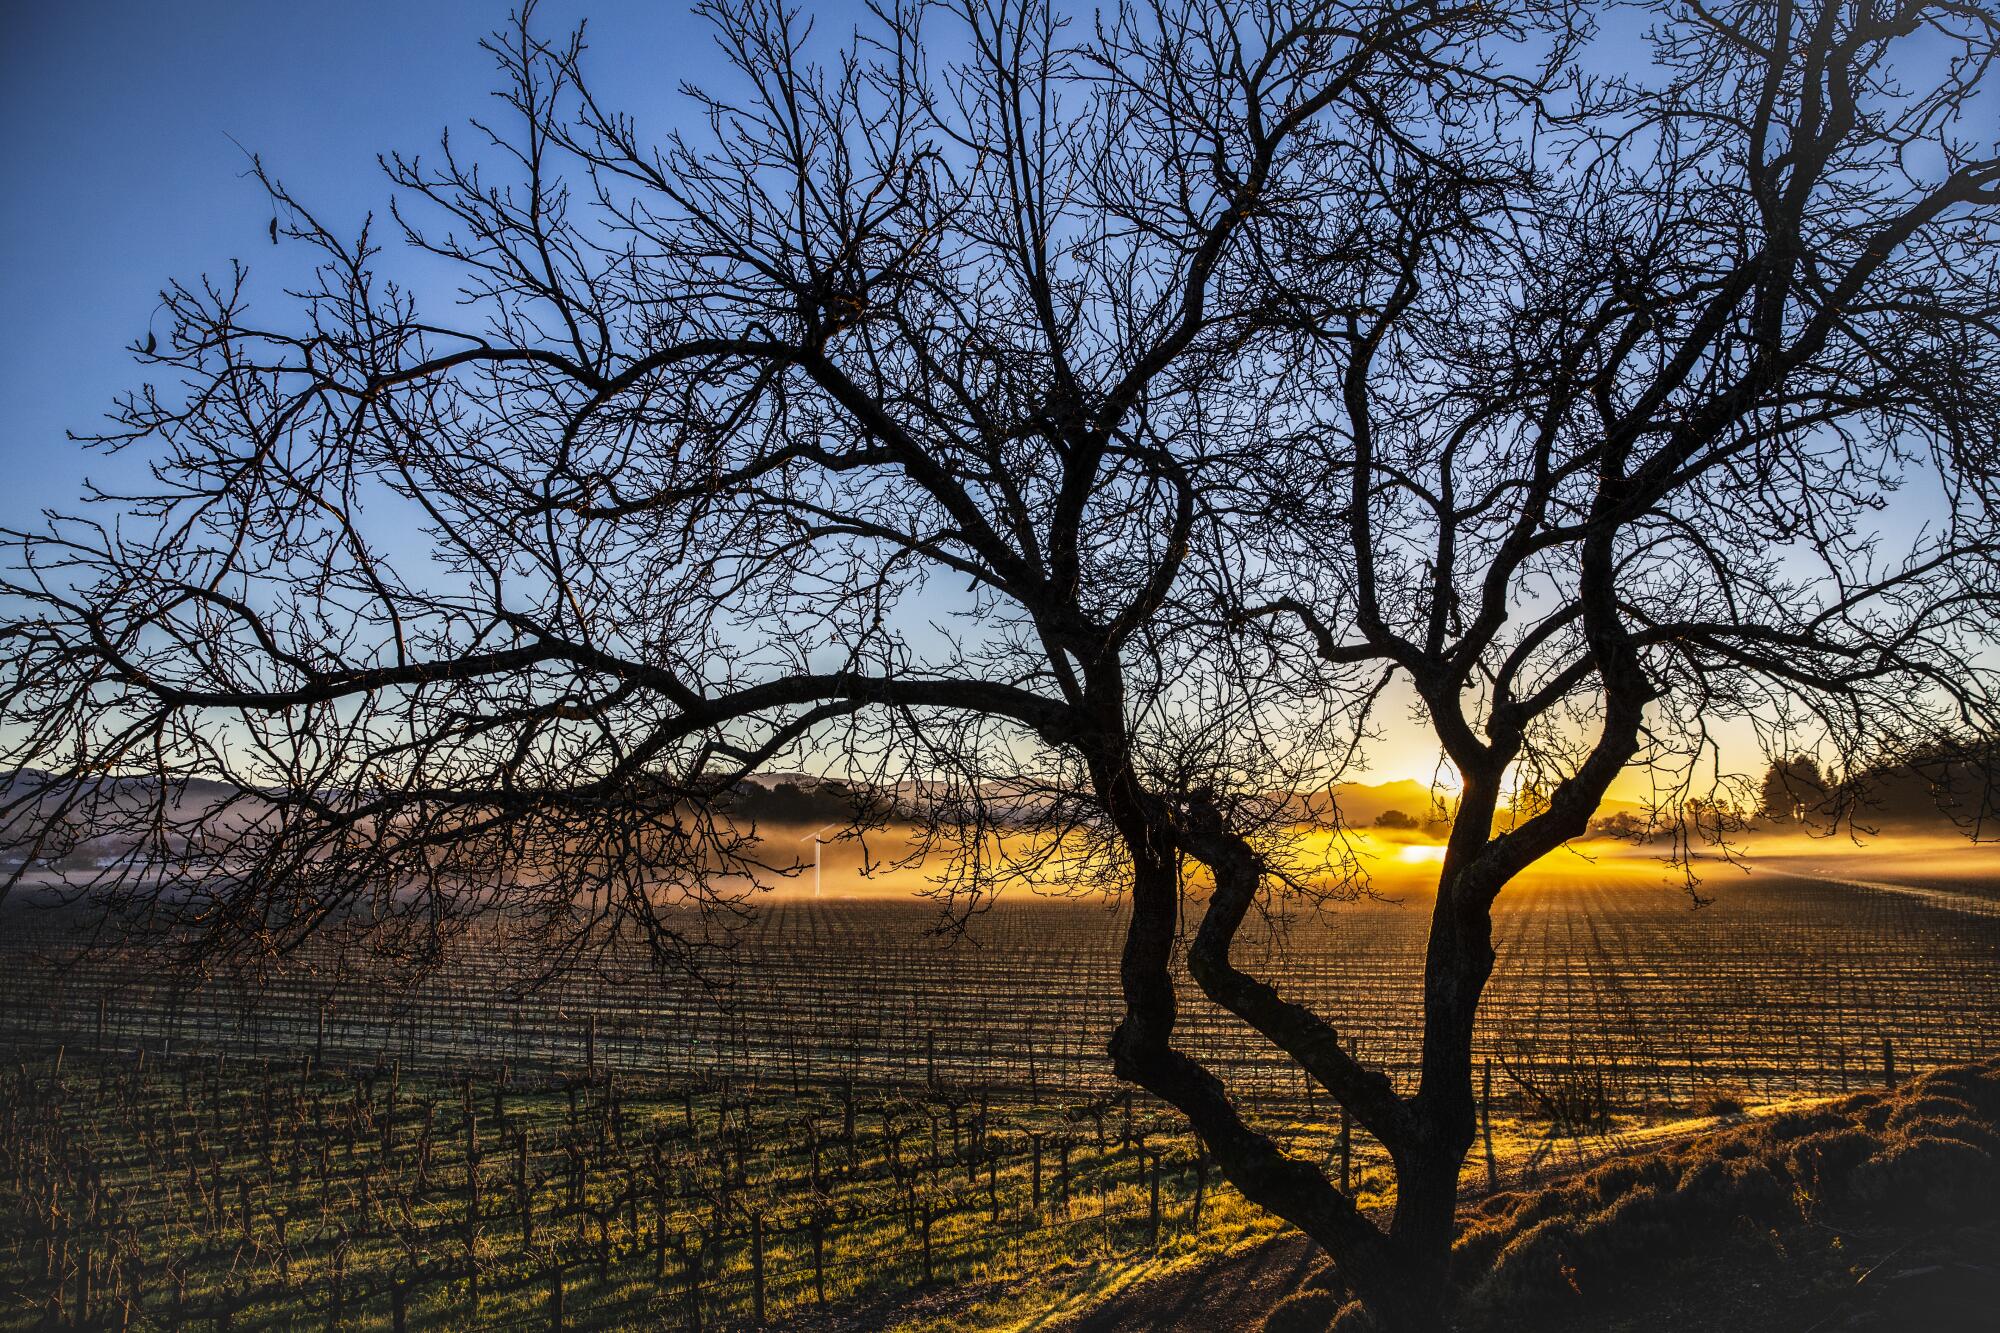 Morning light spreads over a vineyard